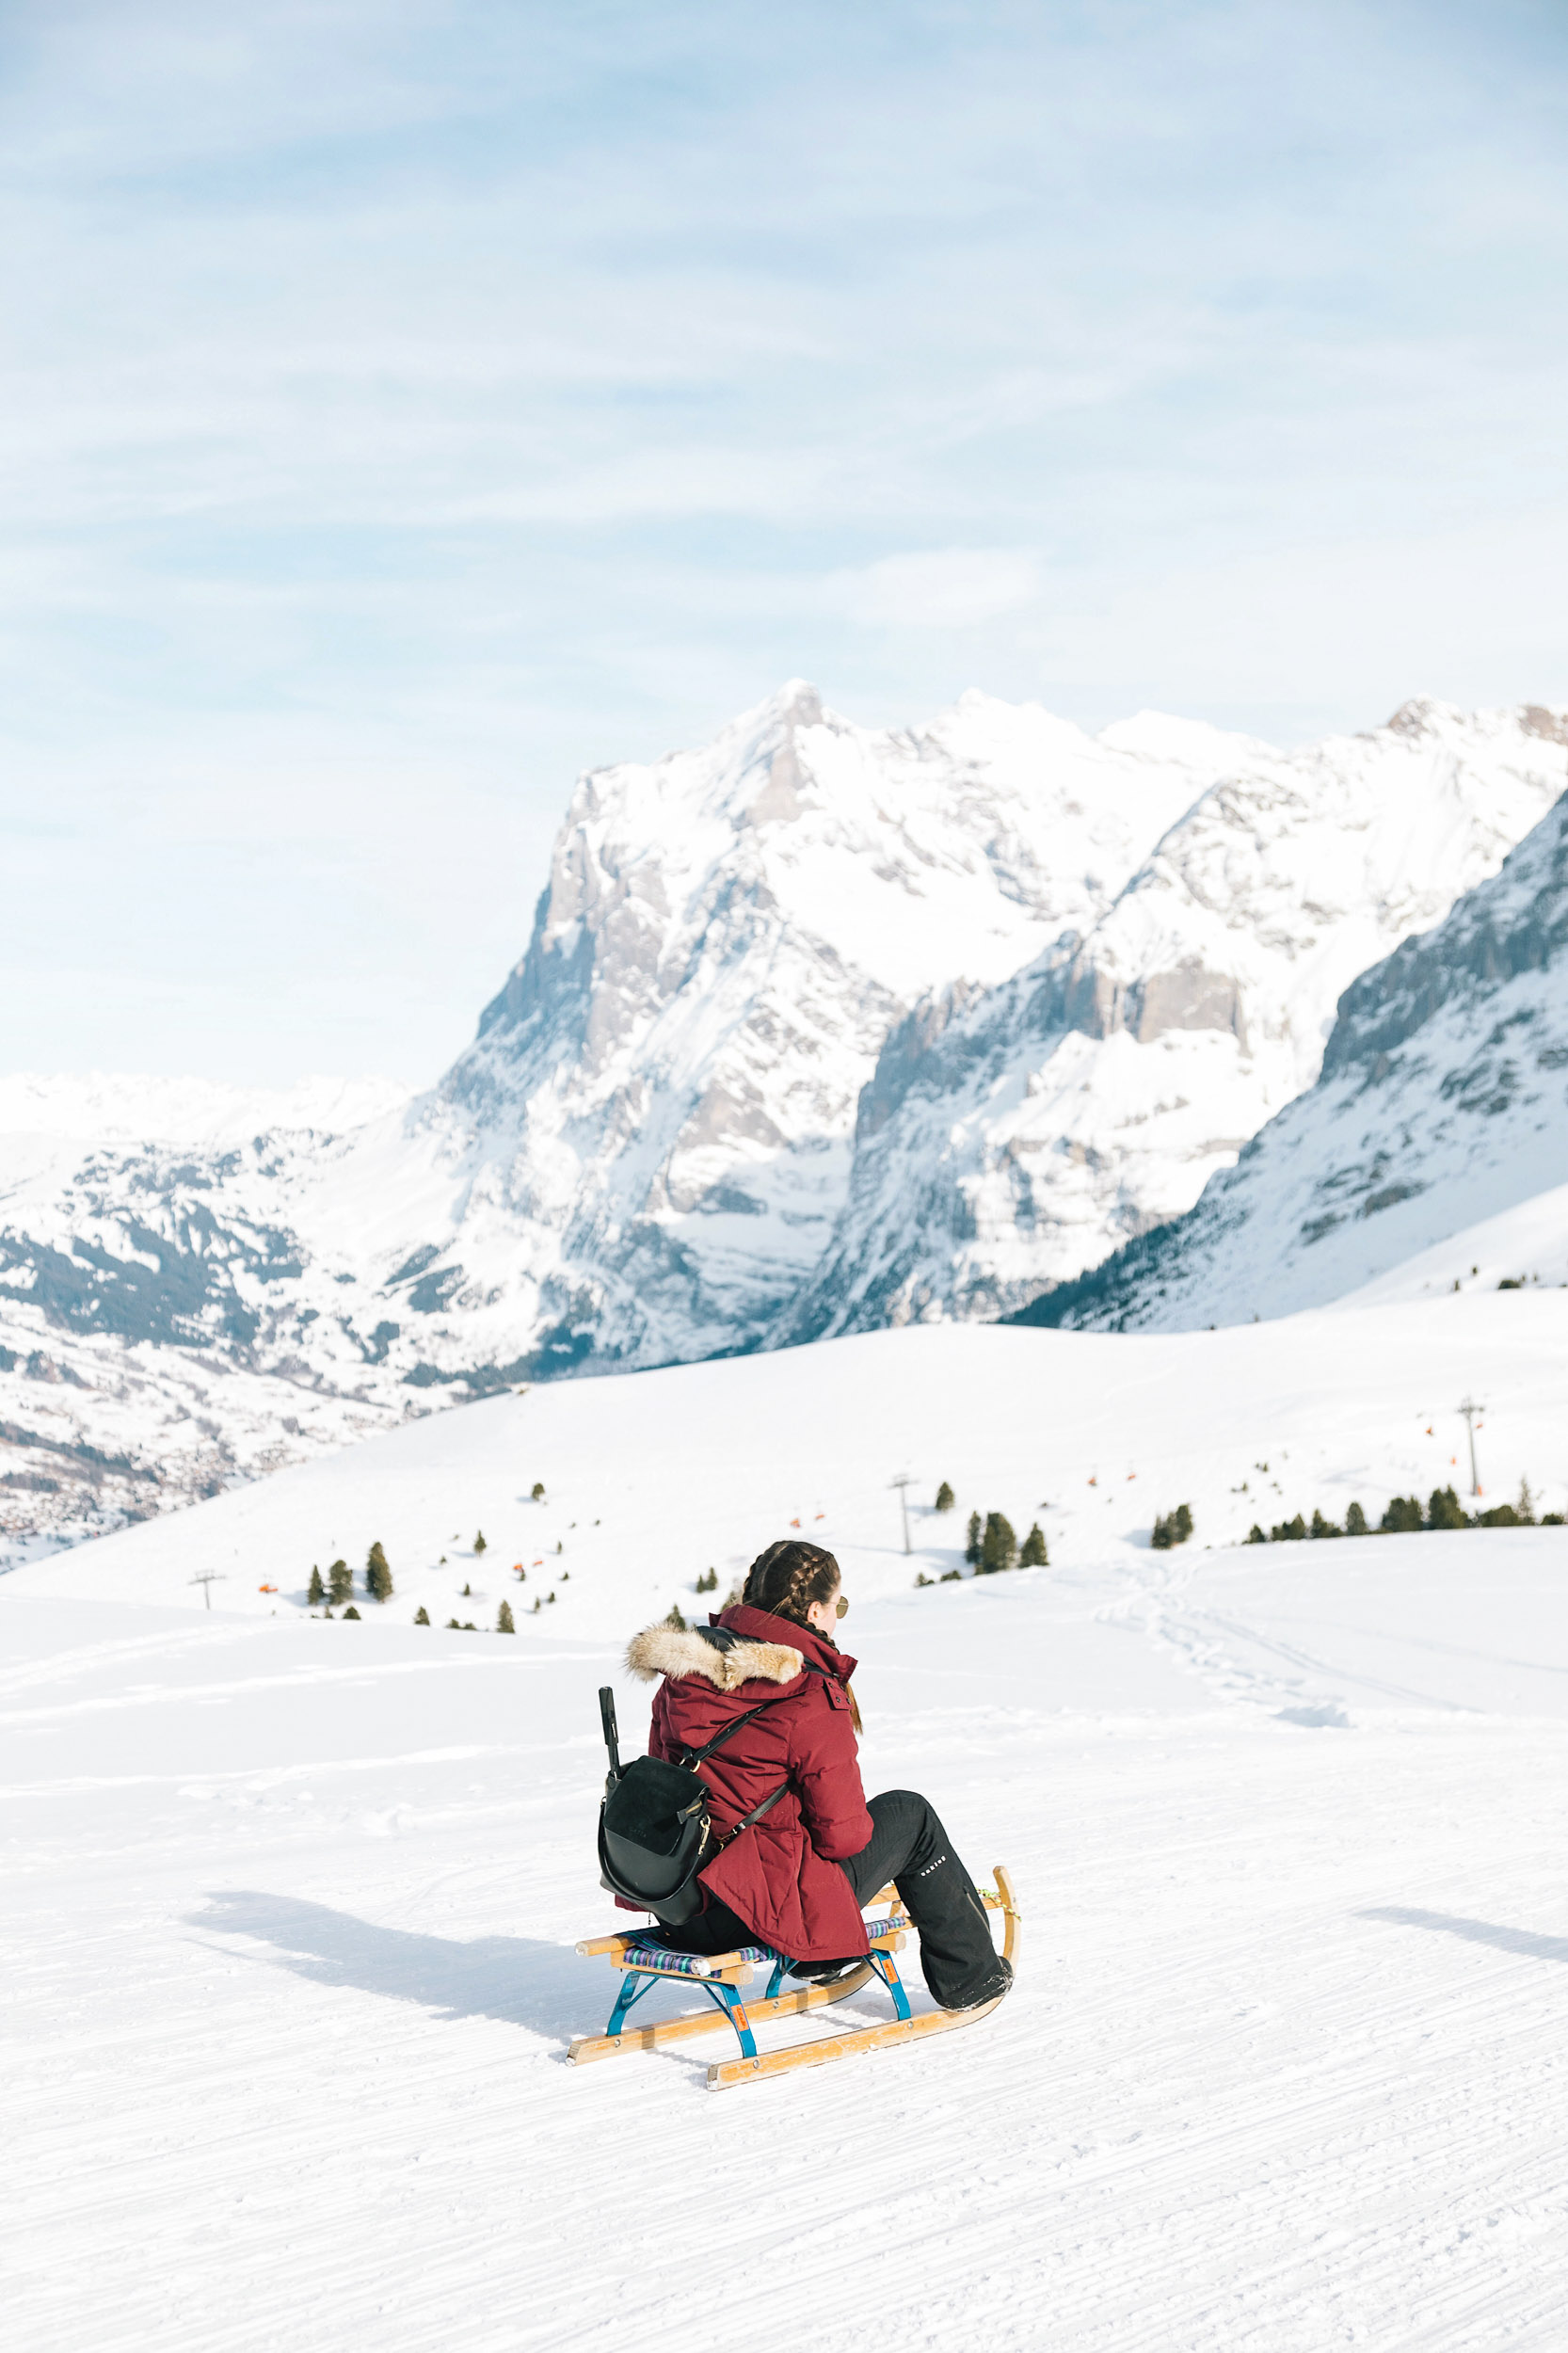 The most fun winter adventure in Switzerland - sledging!